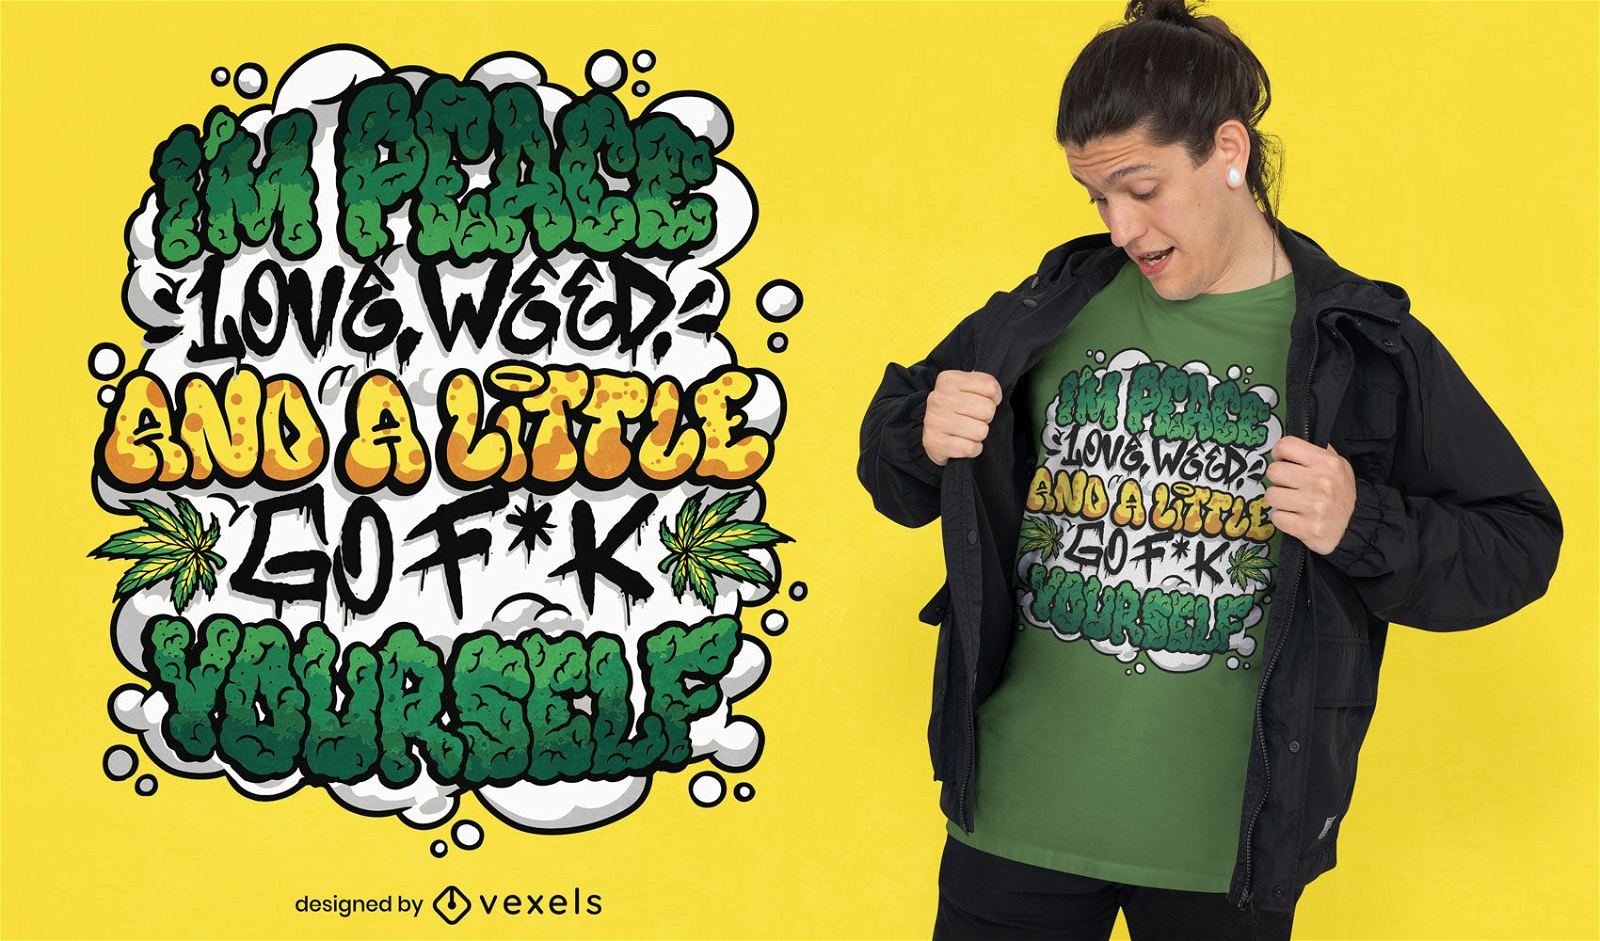 Weed graffiti quote t-shirt design